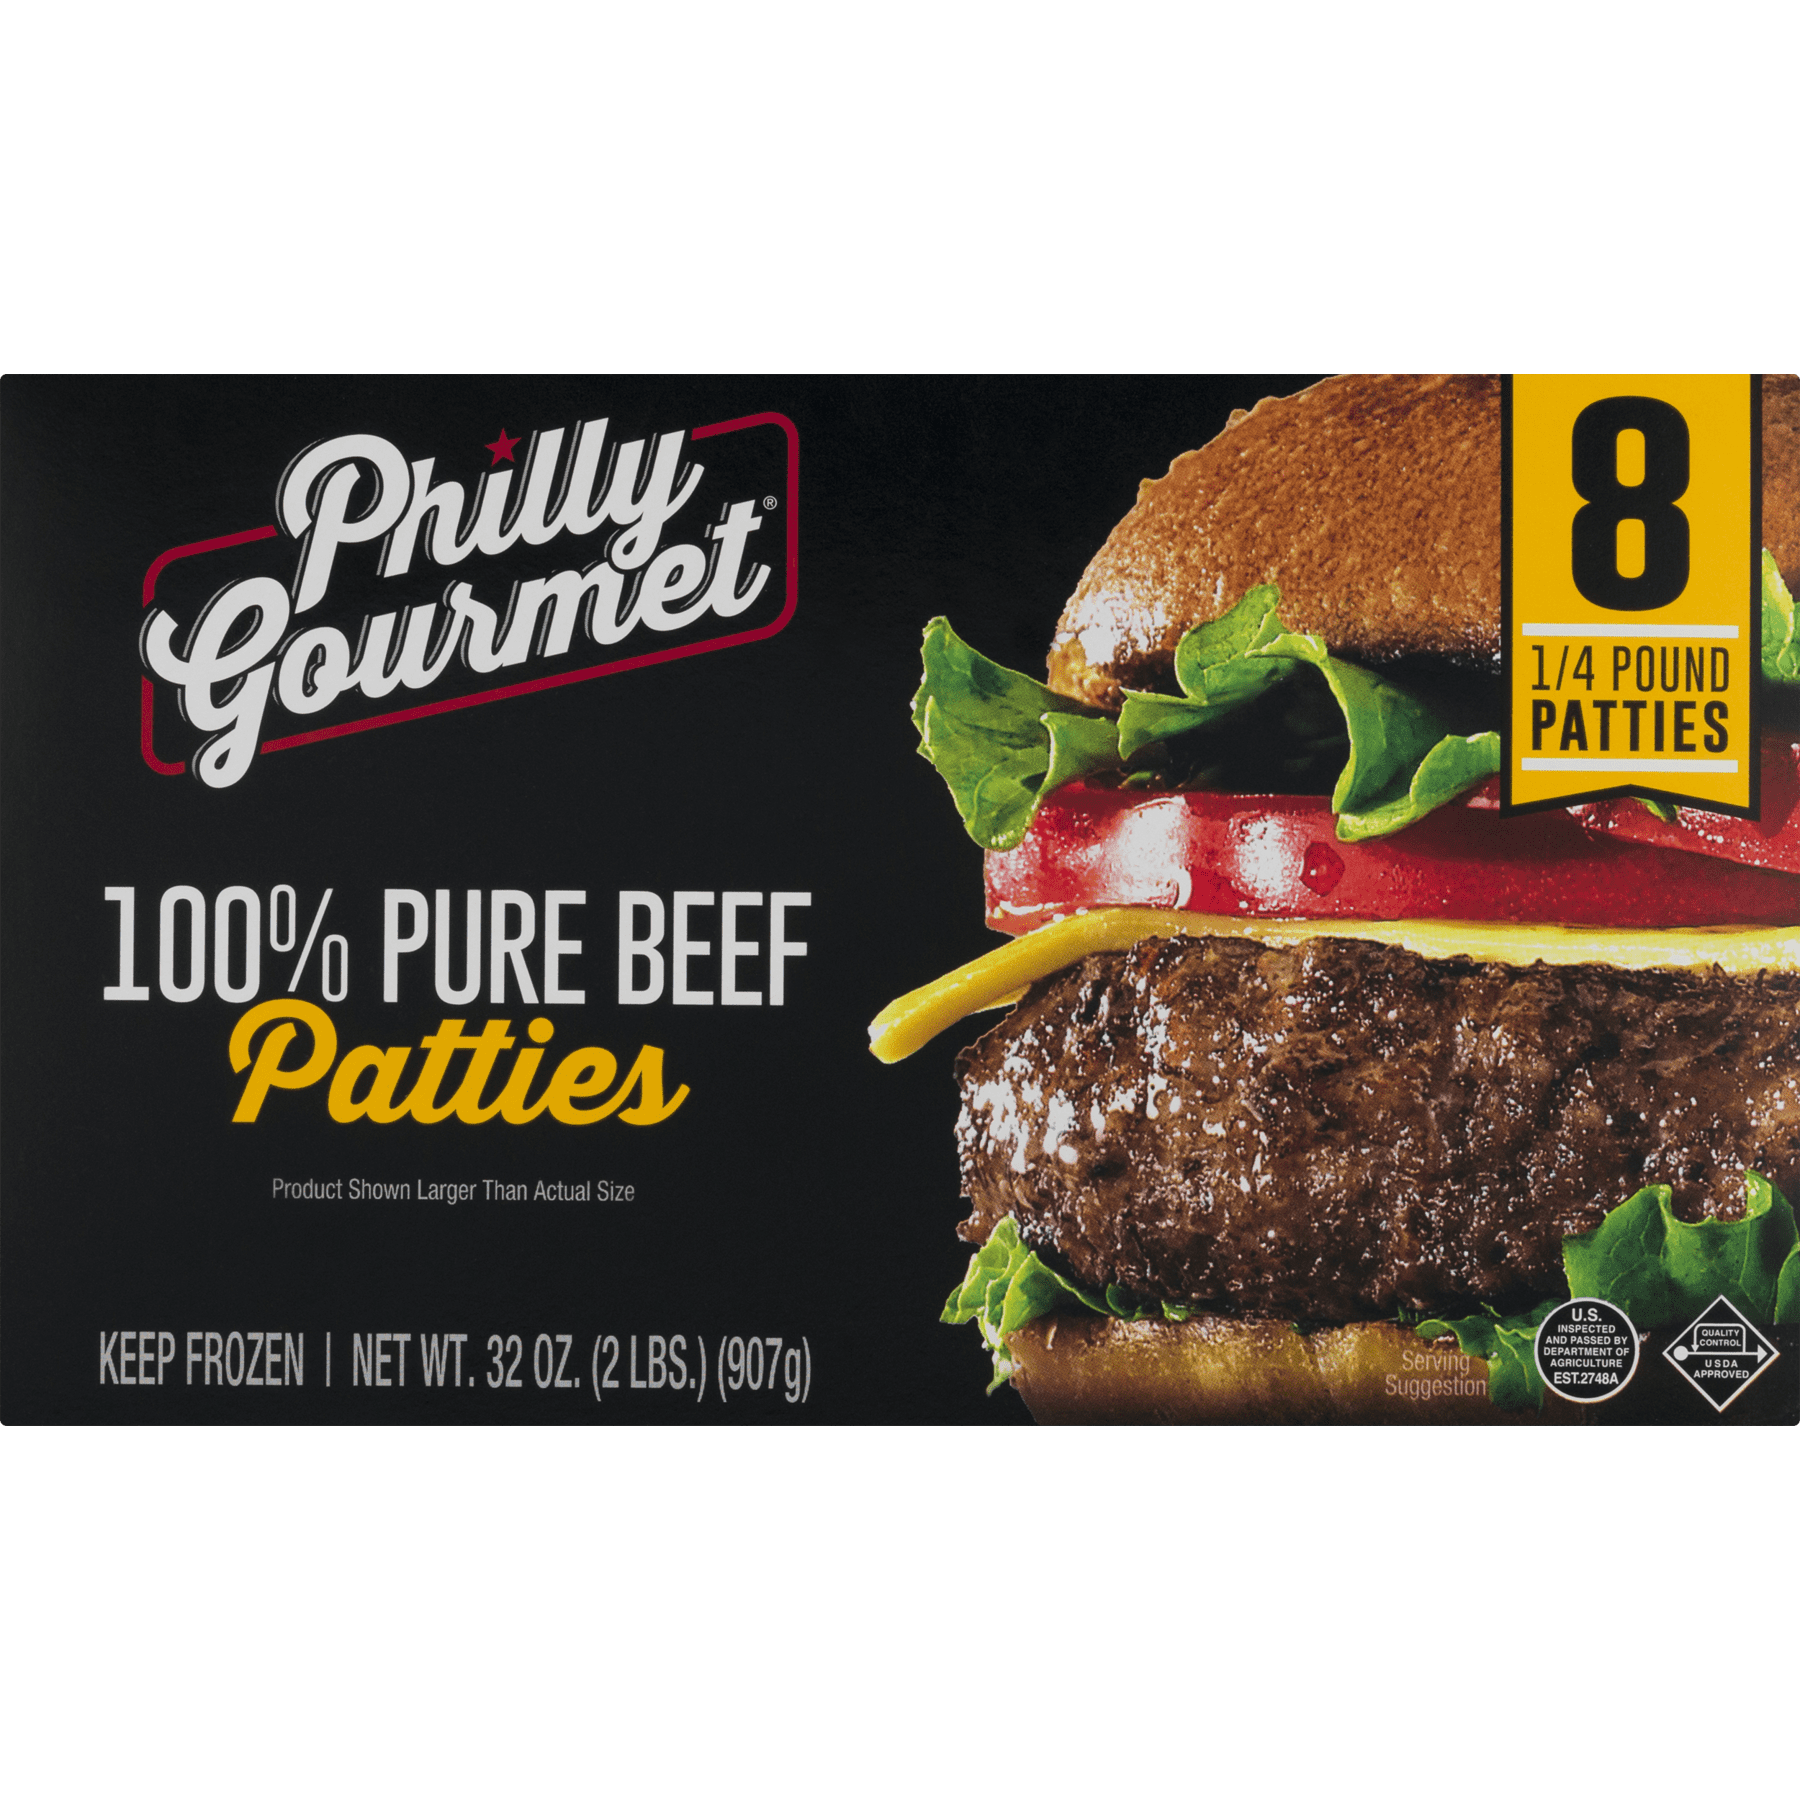 Philly Gourmet Pure Beef Patties, 2lbs